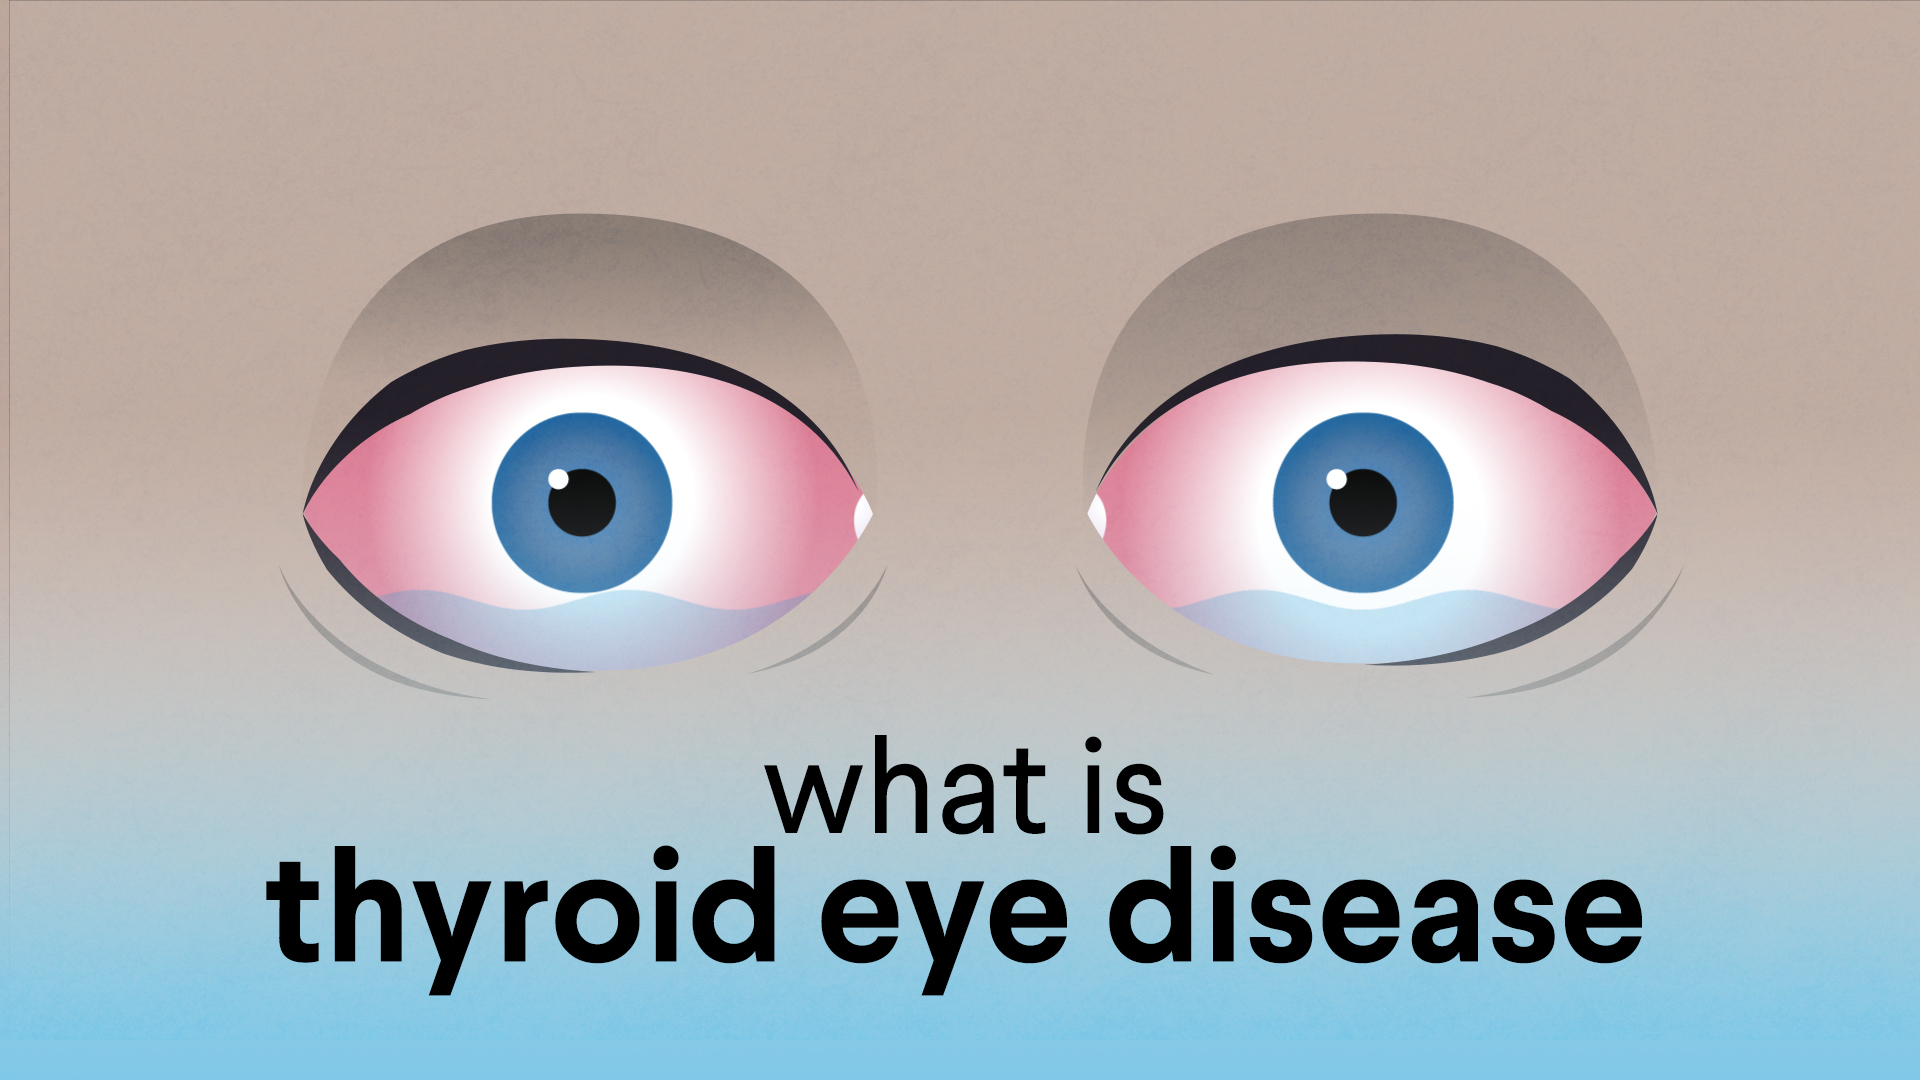 thyroid eye disease photos Thyroid eye disease - Diseases Club Center 2